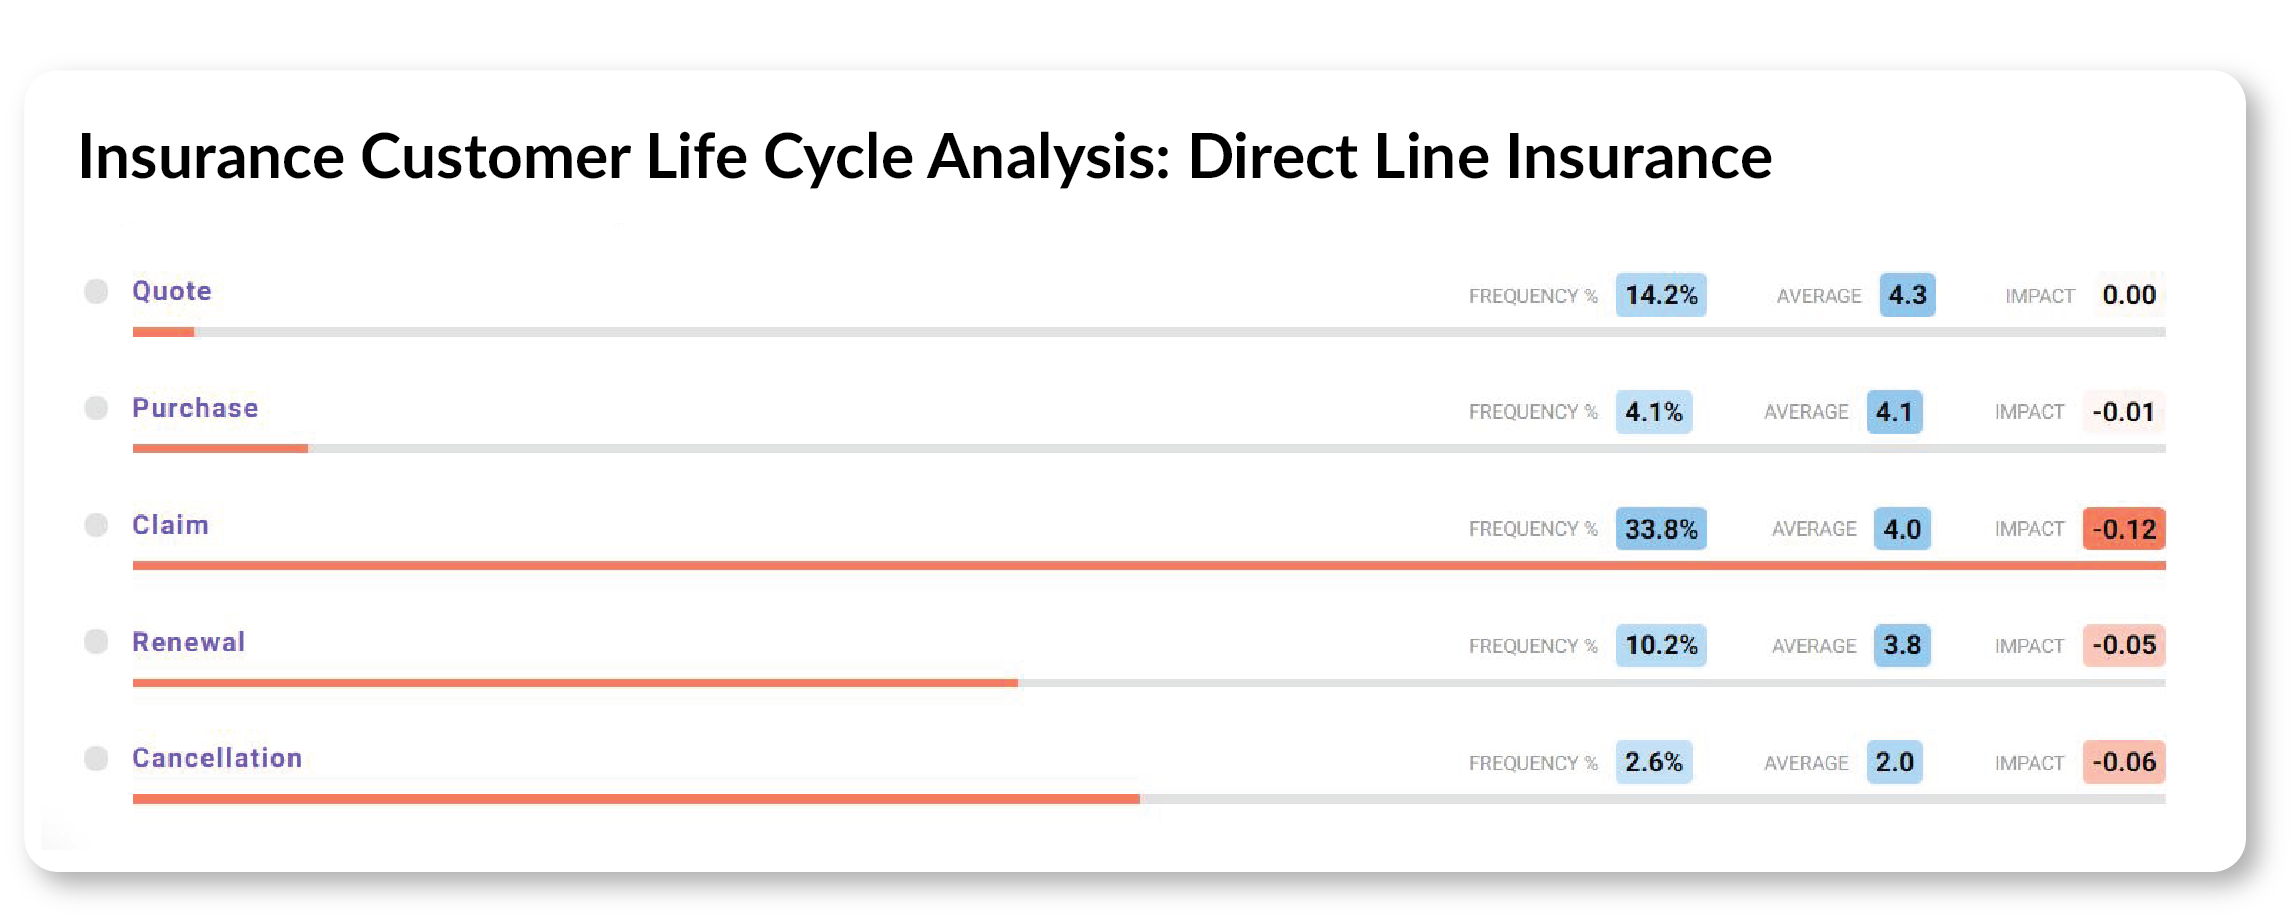 Direct Line Insurance customer life cycle